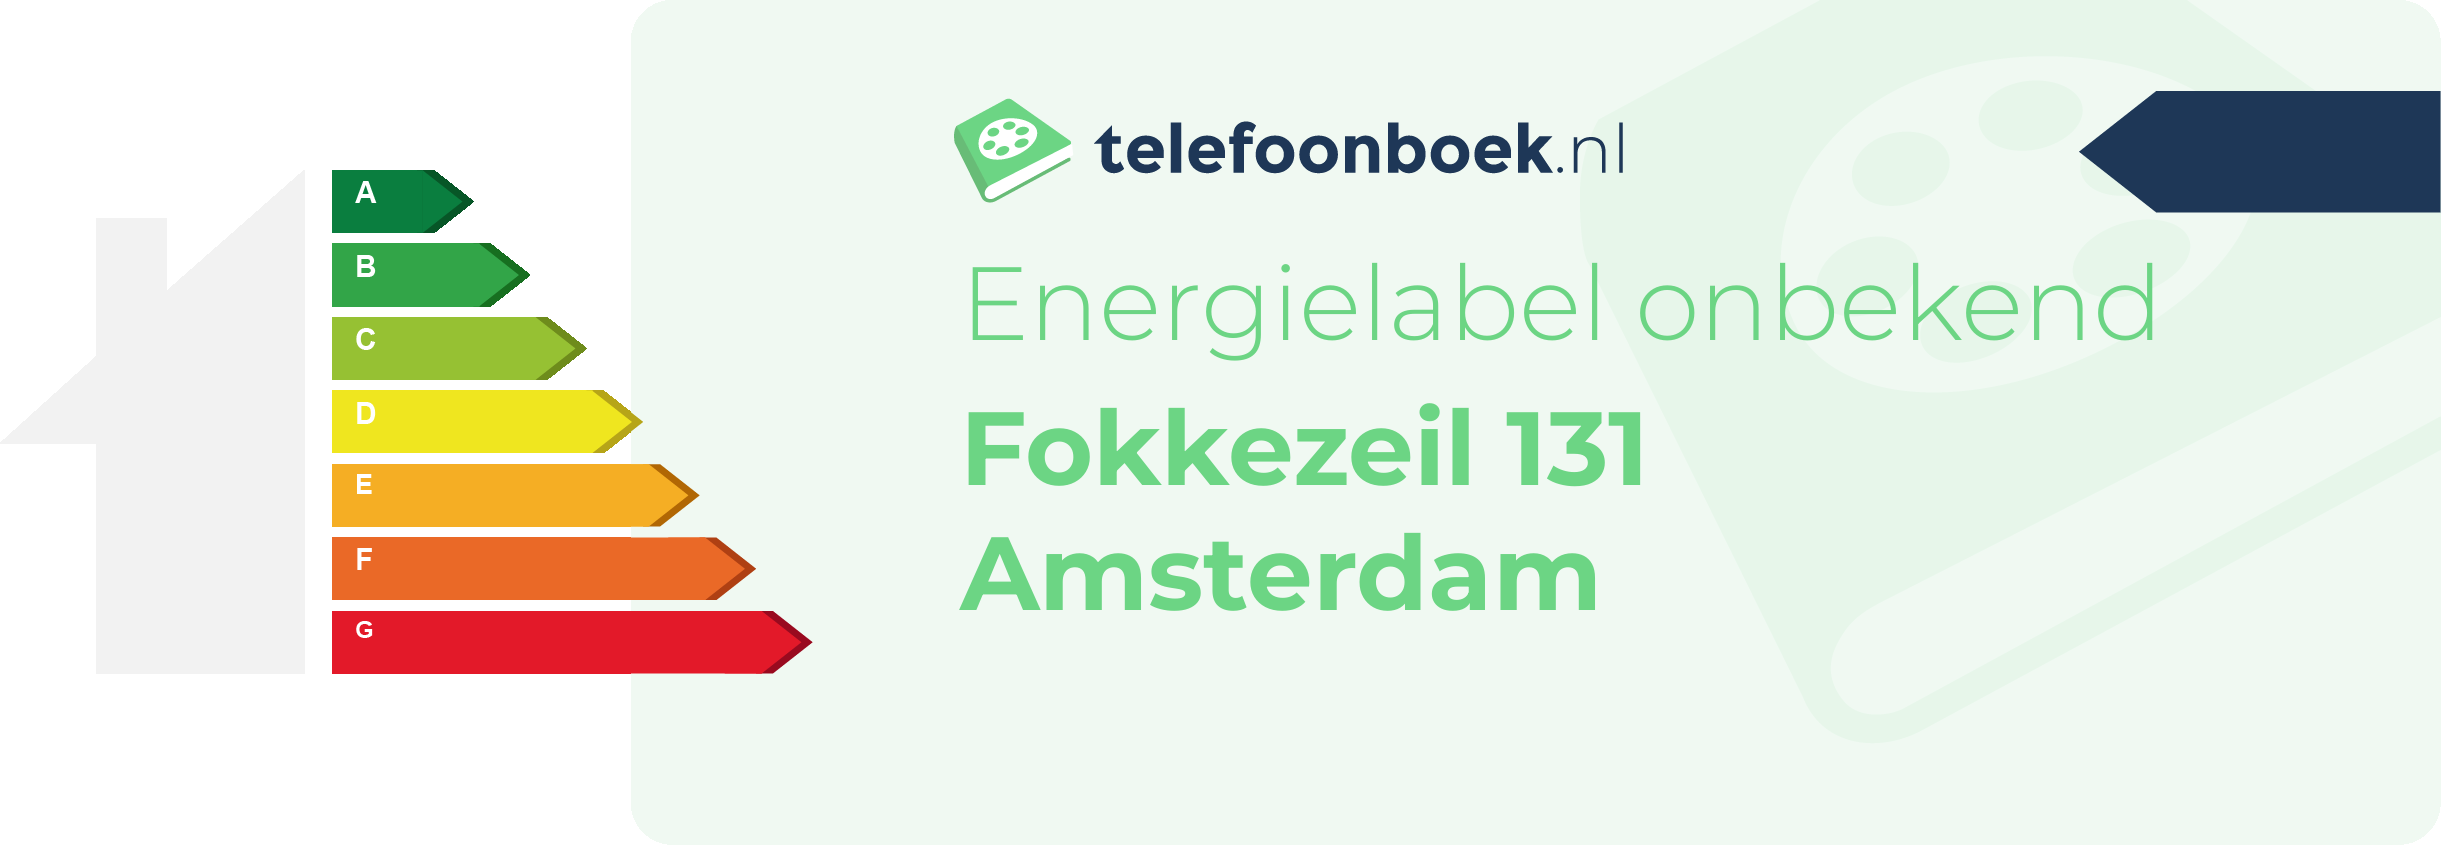 Energielabel Fokkezeil 131 Amsterdam